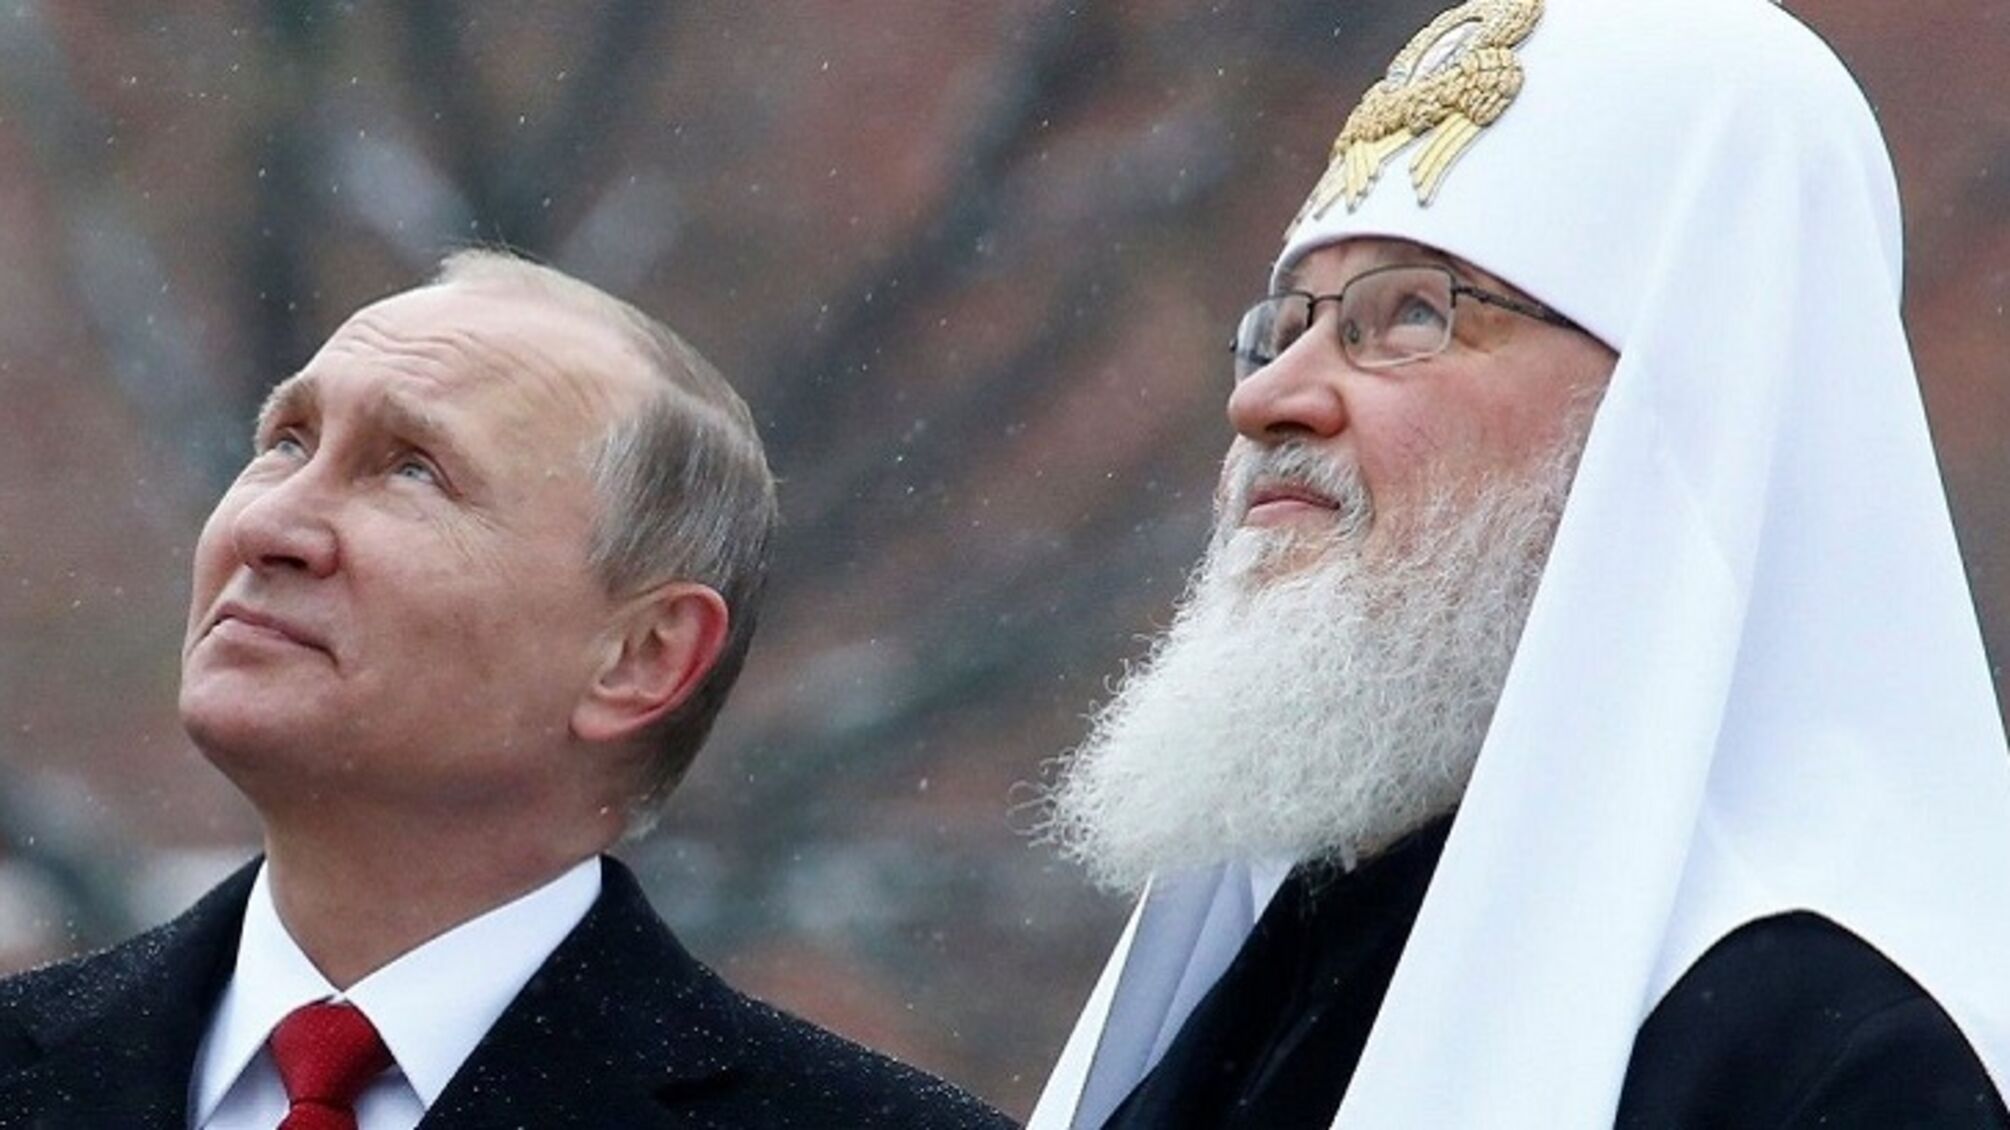 патриарху РПЦ Кириллу сообщено о подозрении